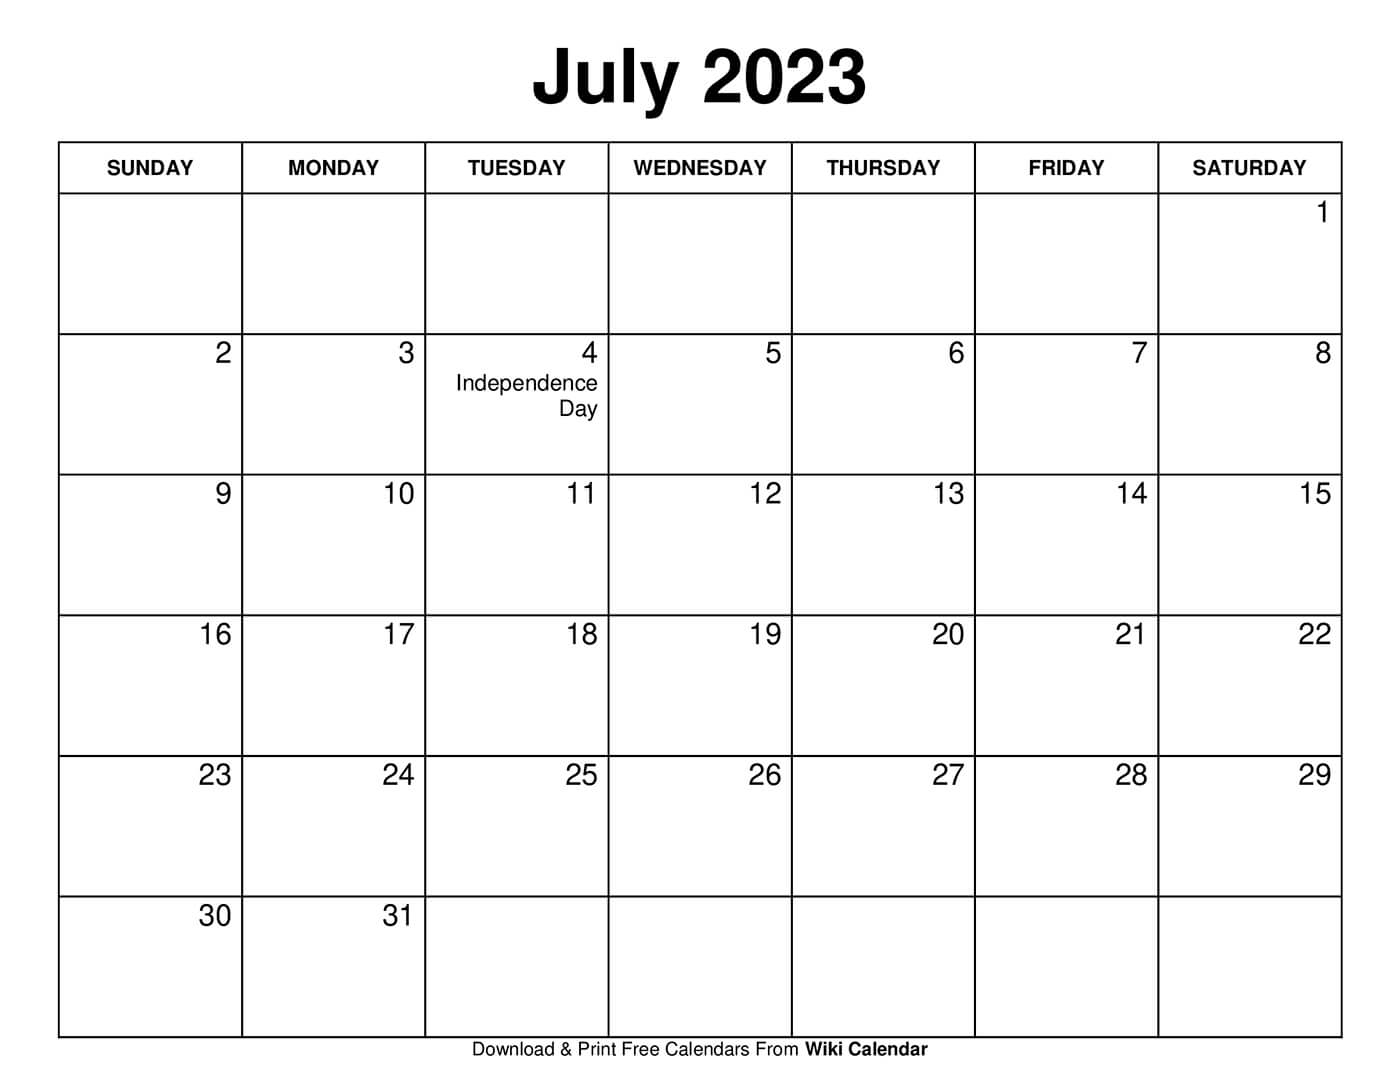 2023 Calendar Wiki-calendar - Printable Calendar 2023